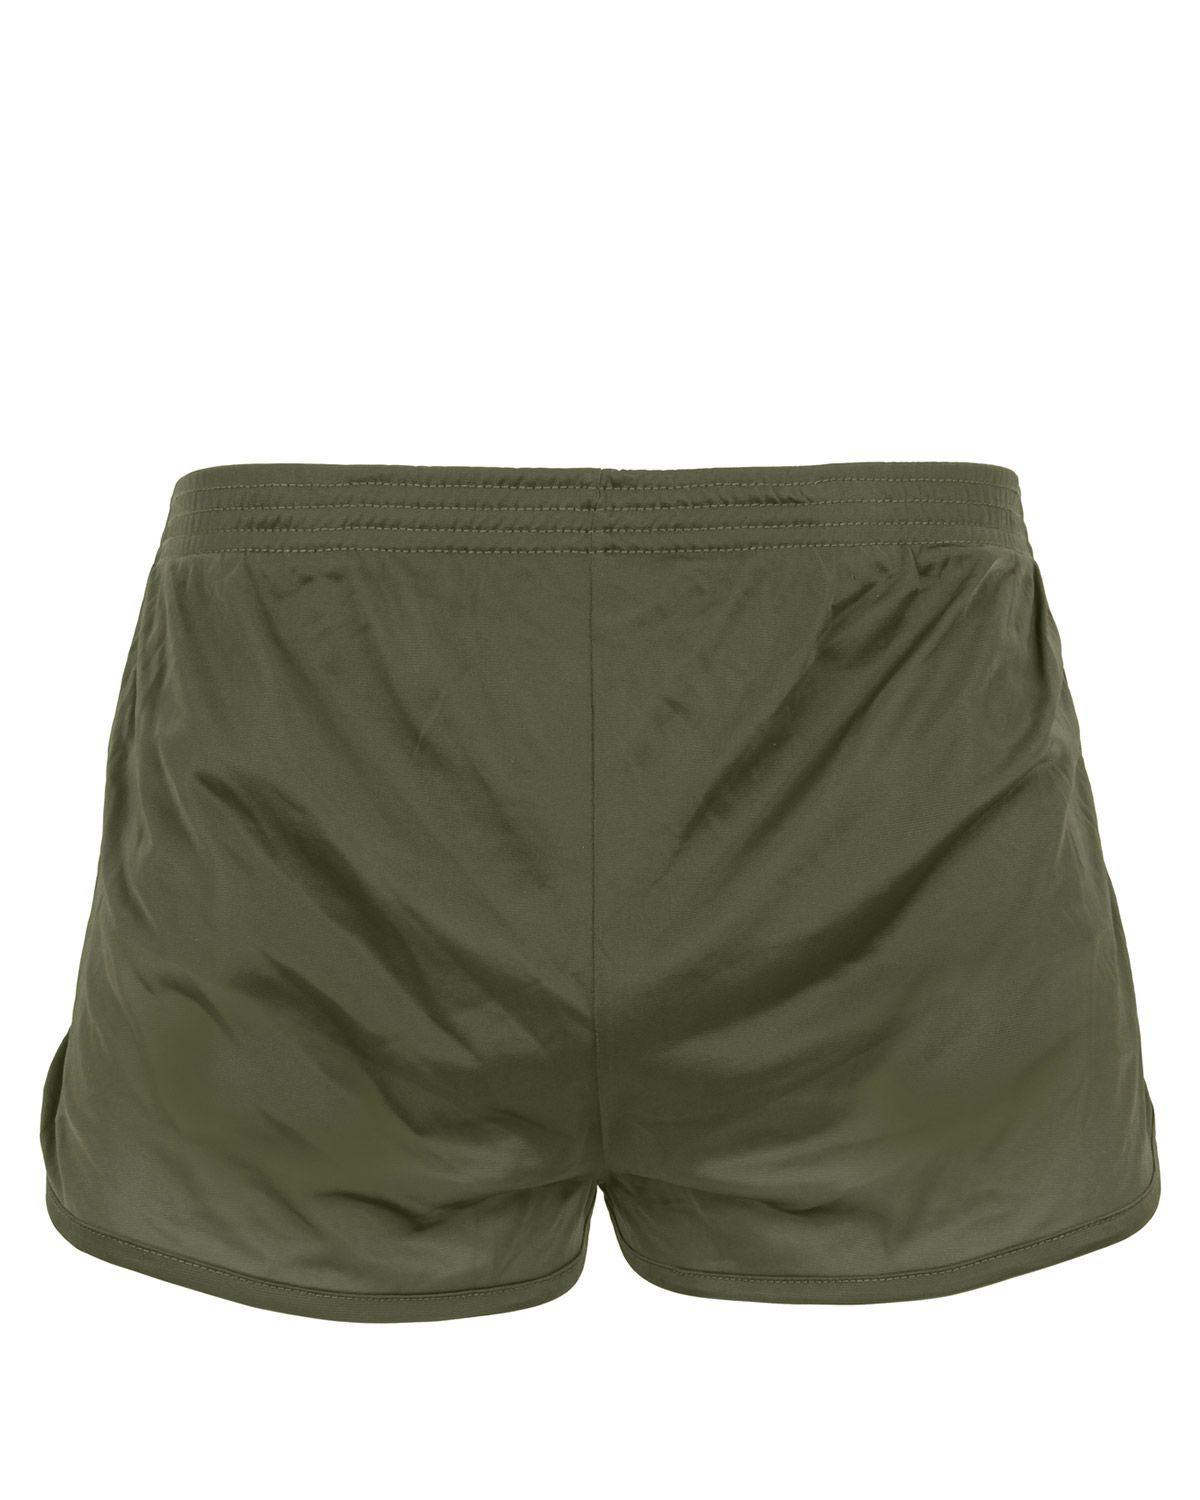 Rothco Ranger P/T Shorts (Oliven, M)